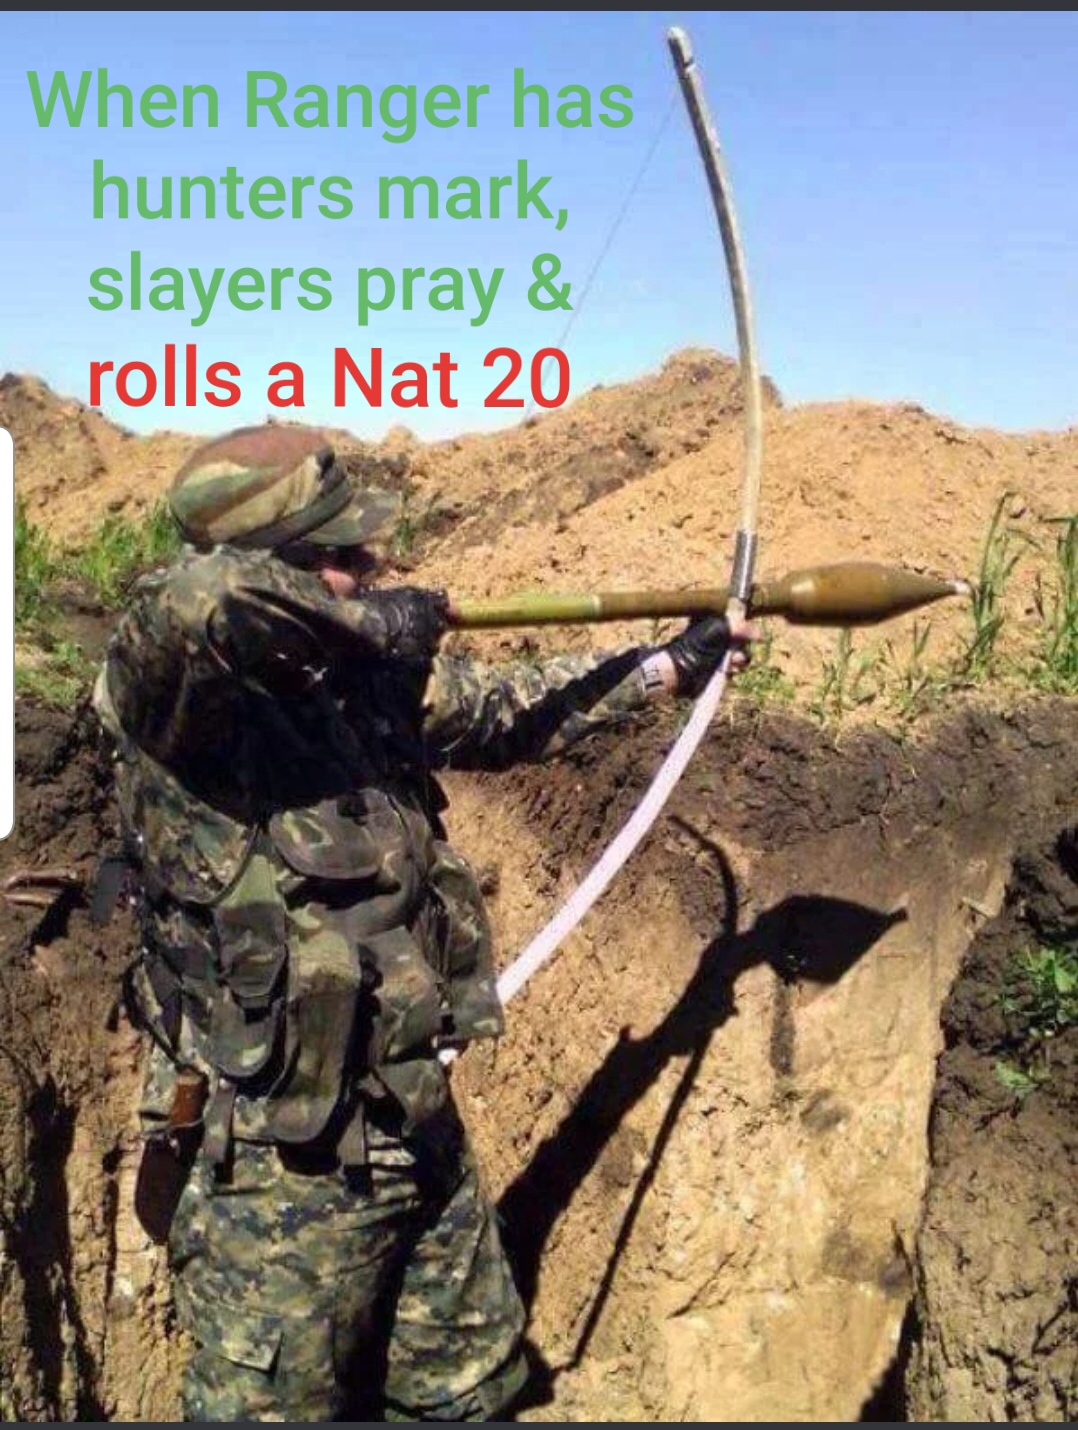 D&D meme - leviathan's breath meme - When Ranger has hunters mark, slayers pray & rolls a Nat 20